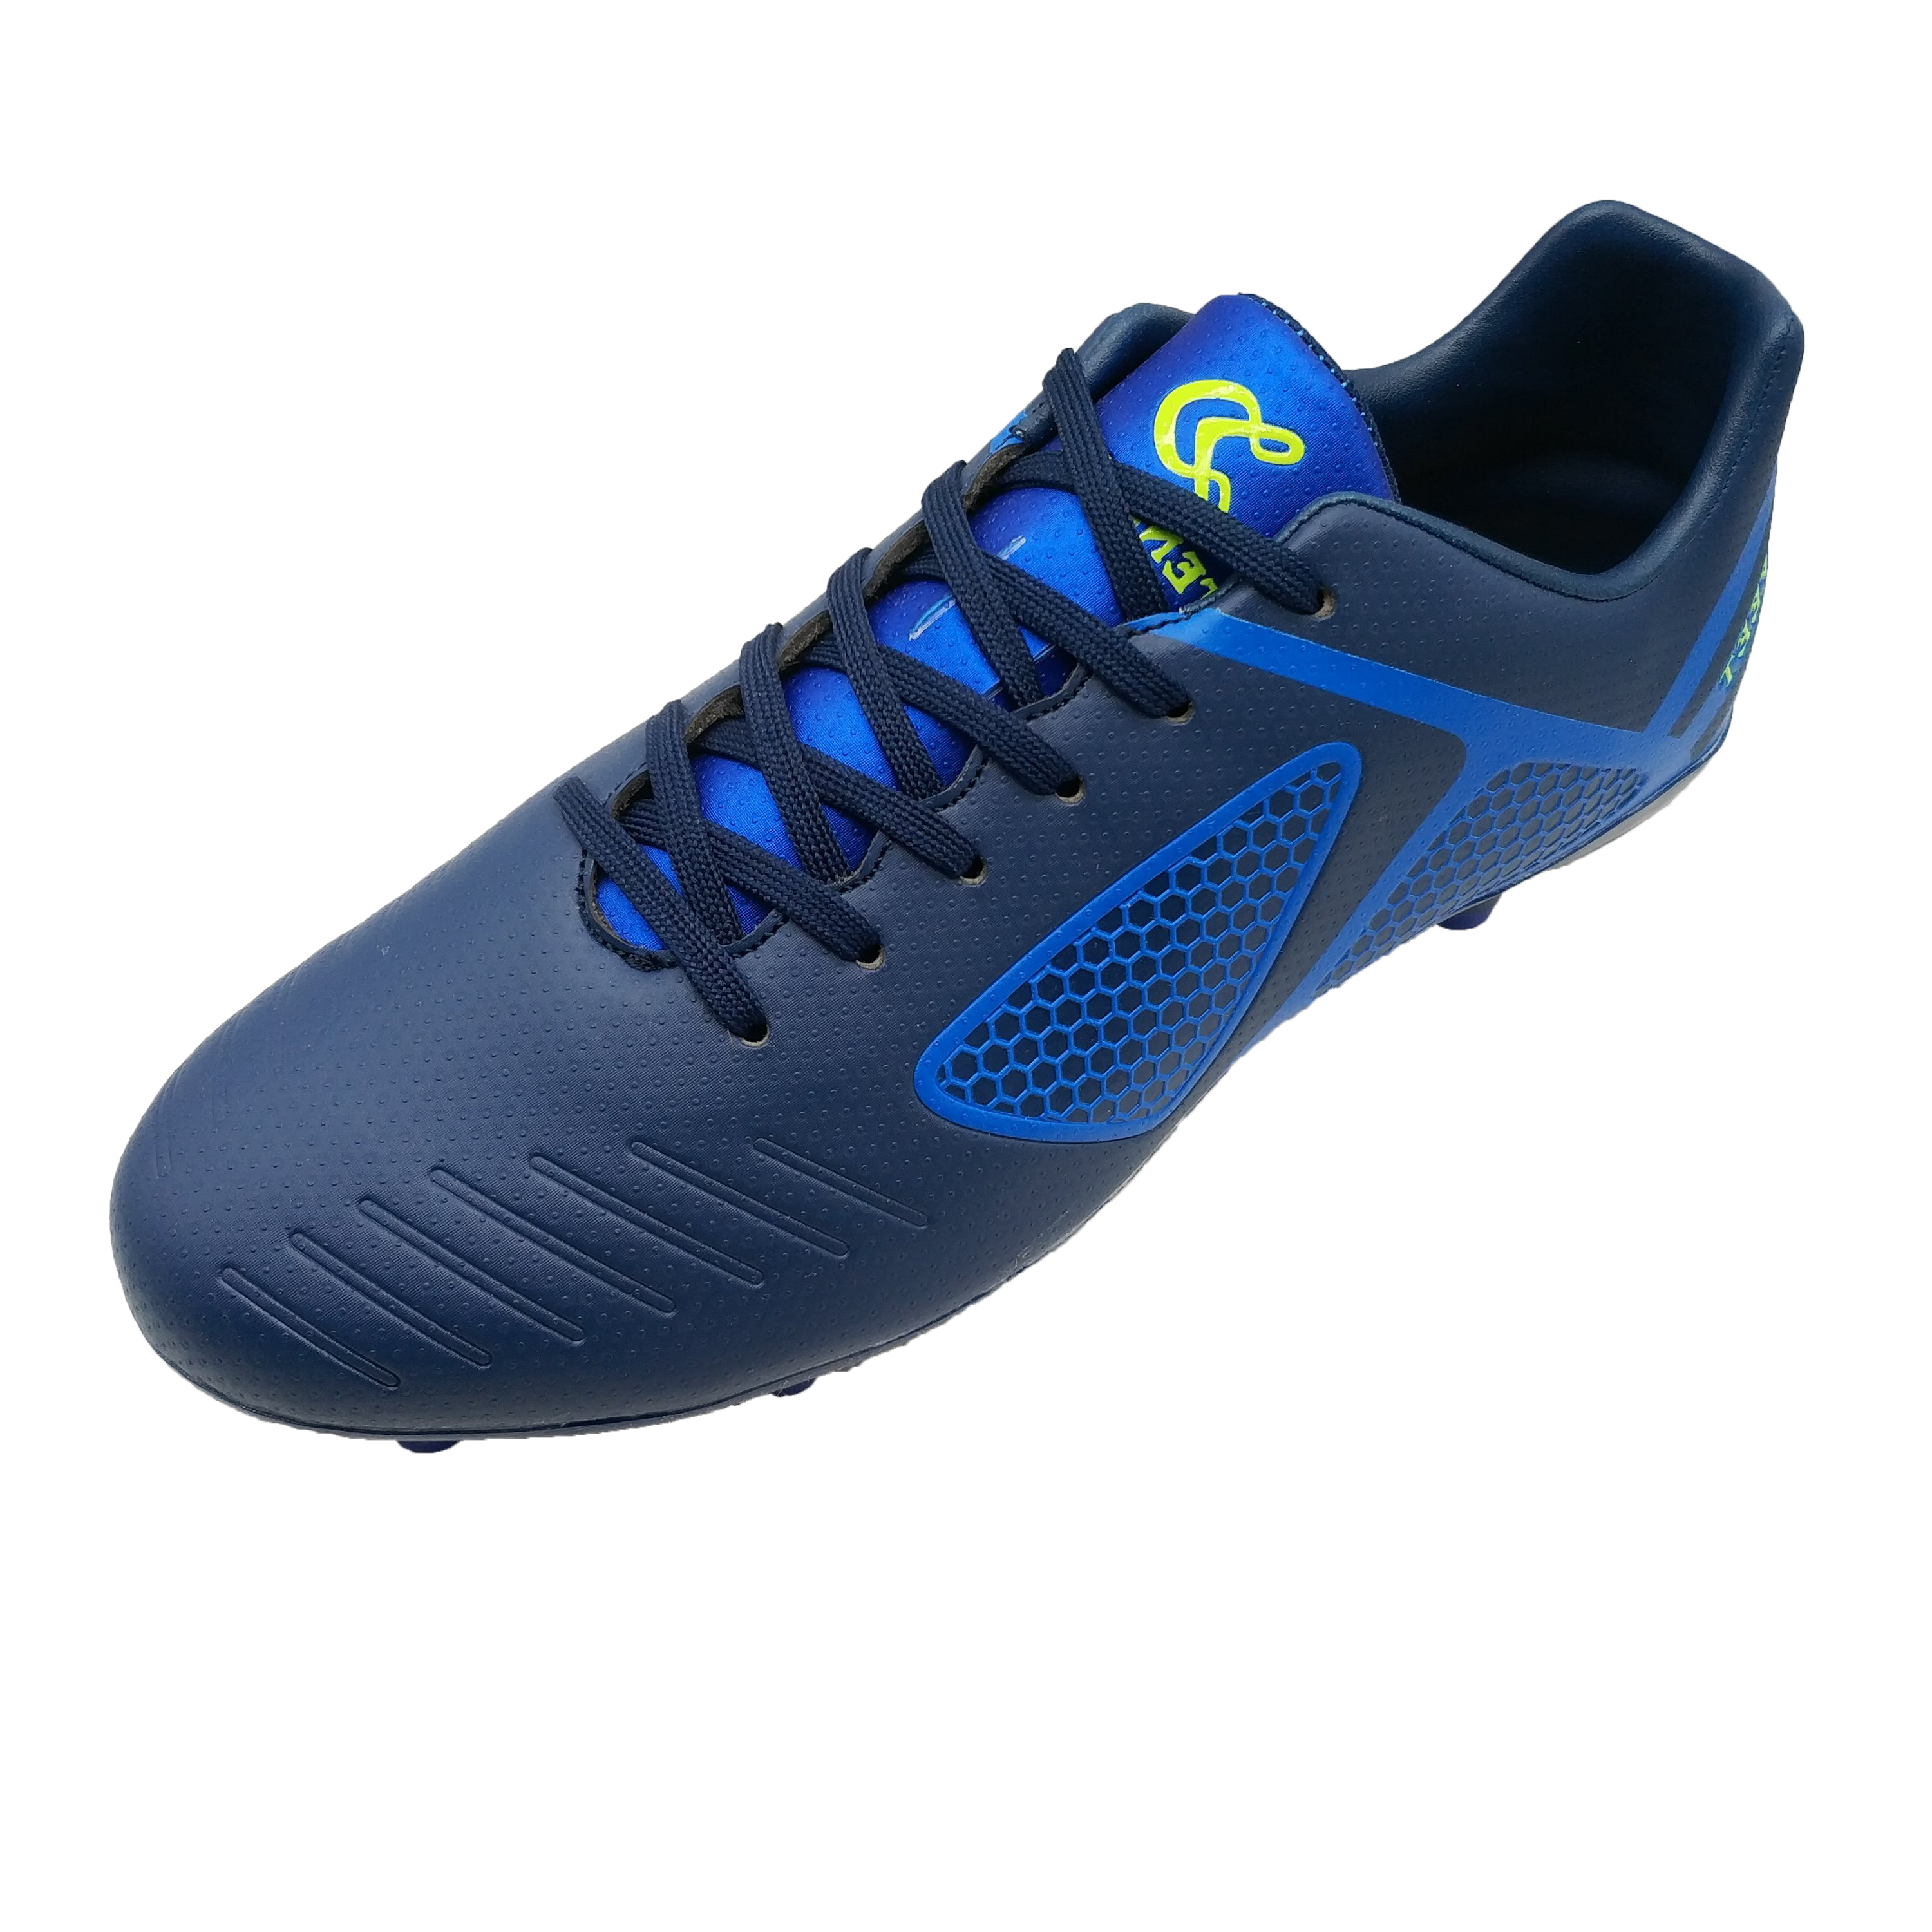 Oem Factory Fashion Futebol Boots China Supplier Original Soccer Shoes